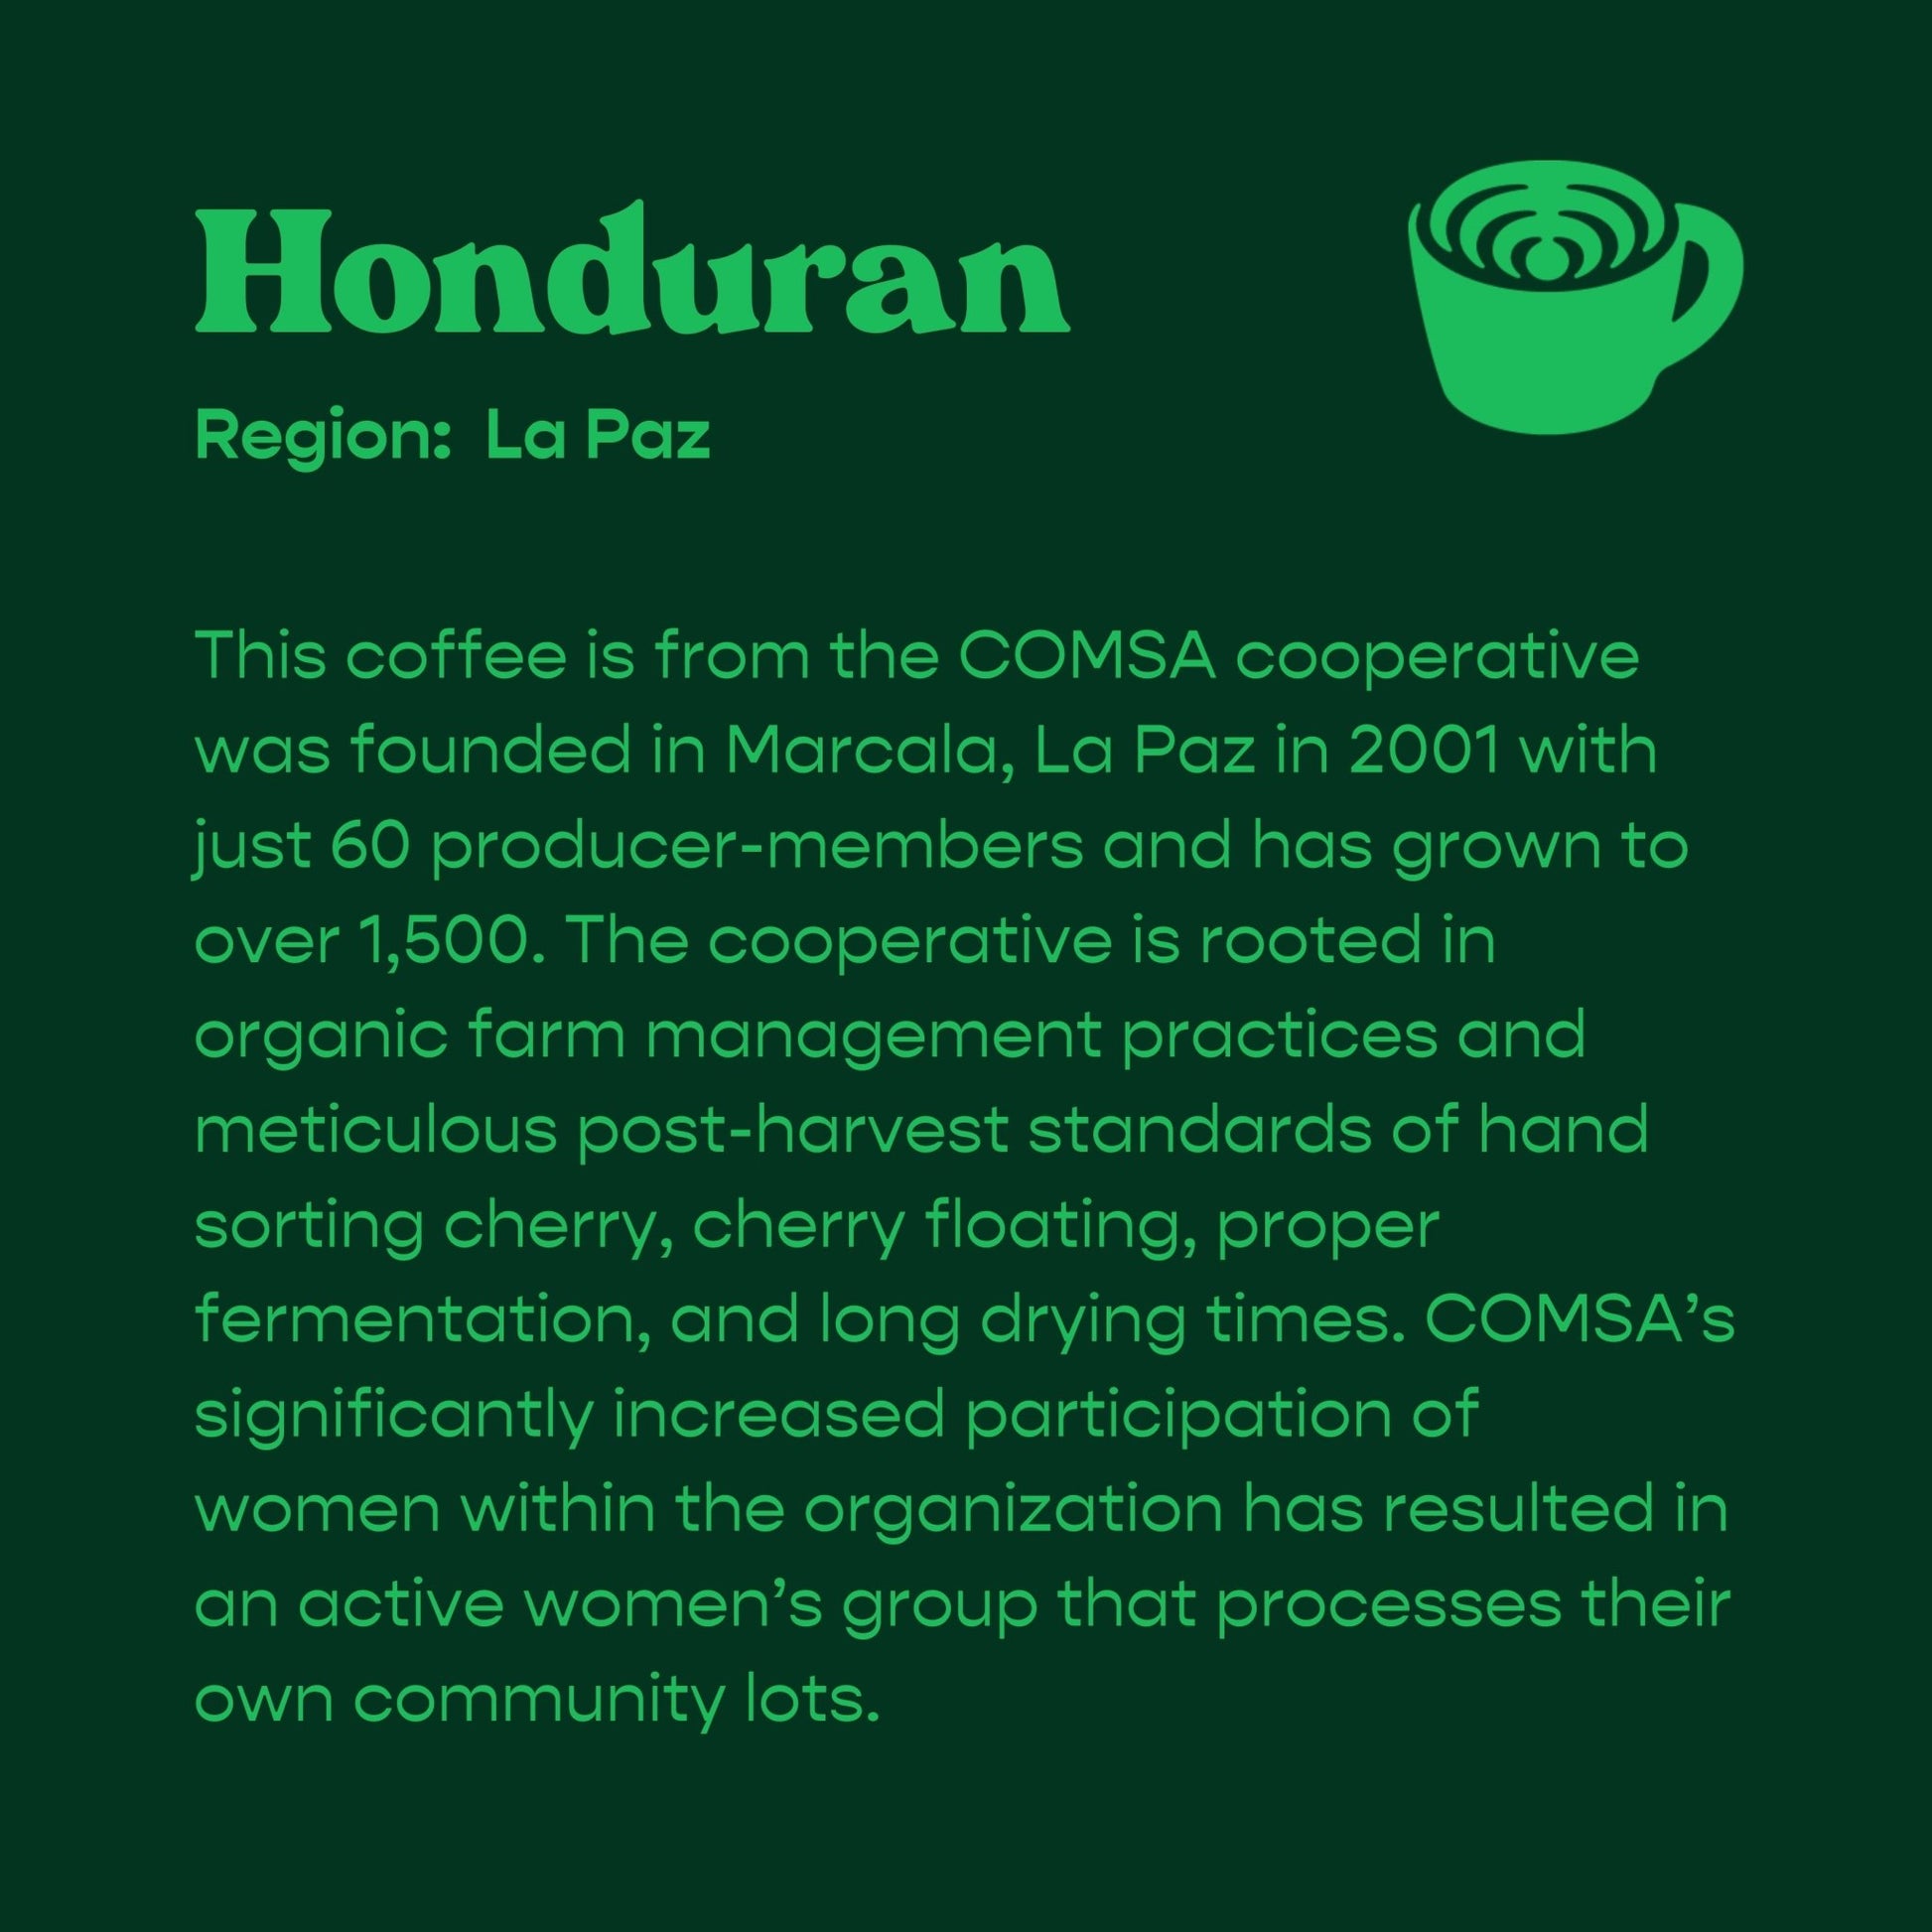 Honduran - Sound Coffee